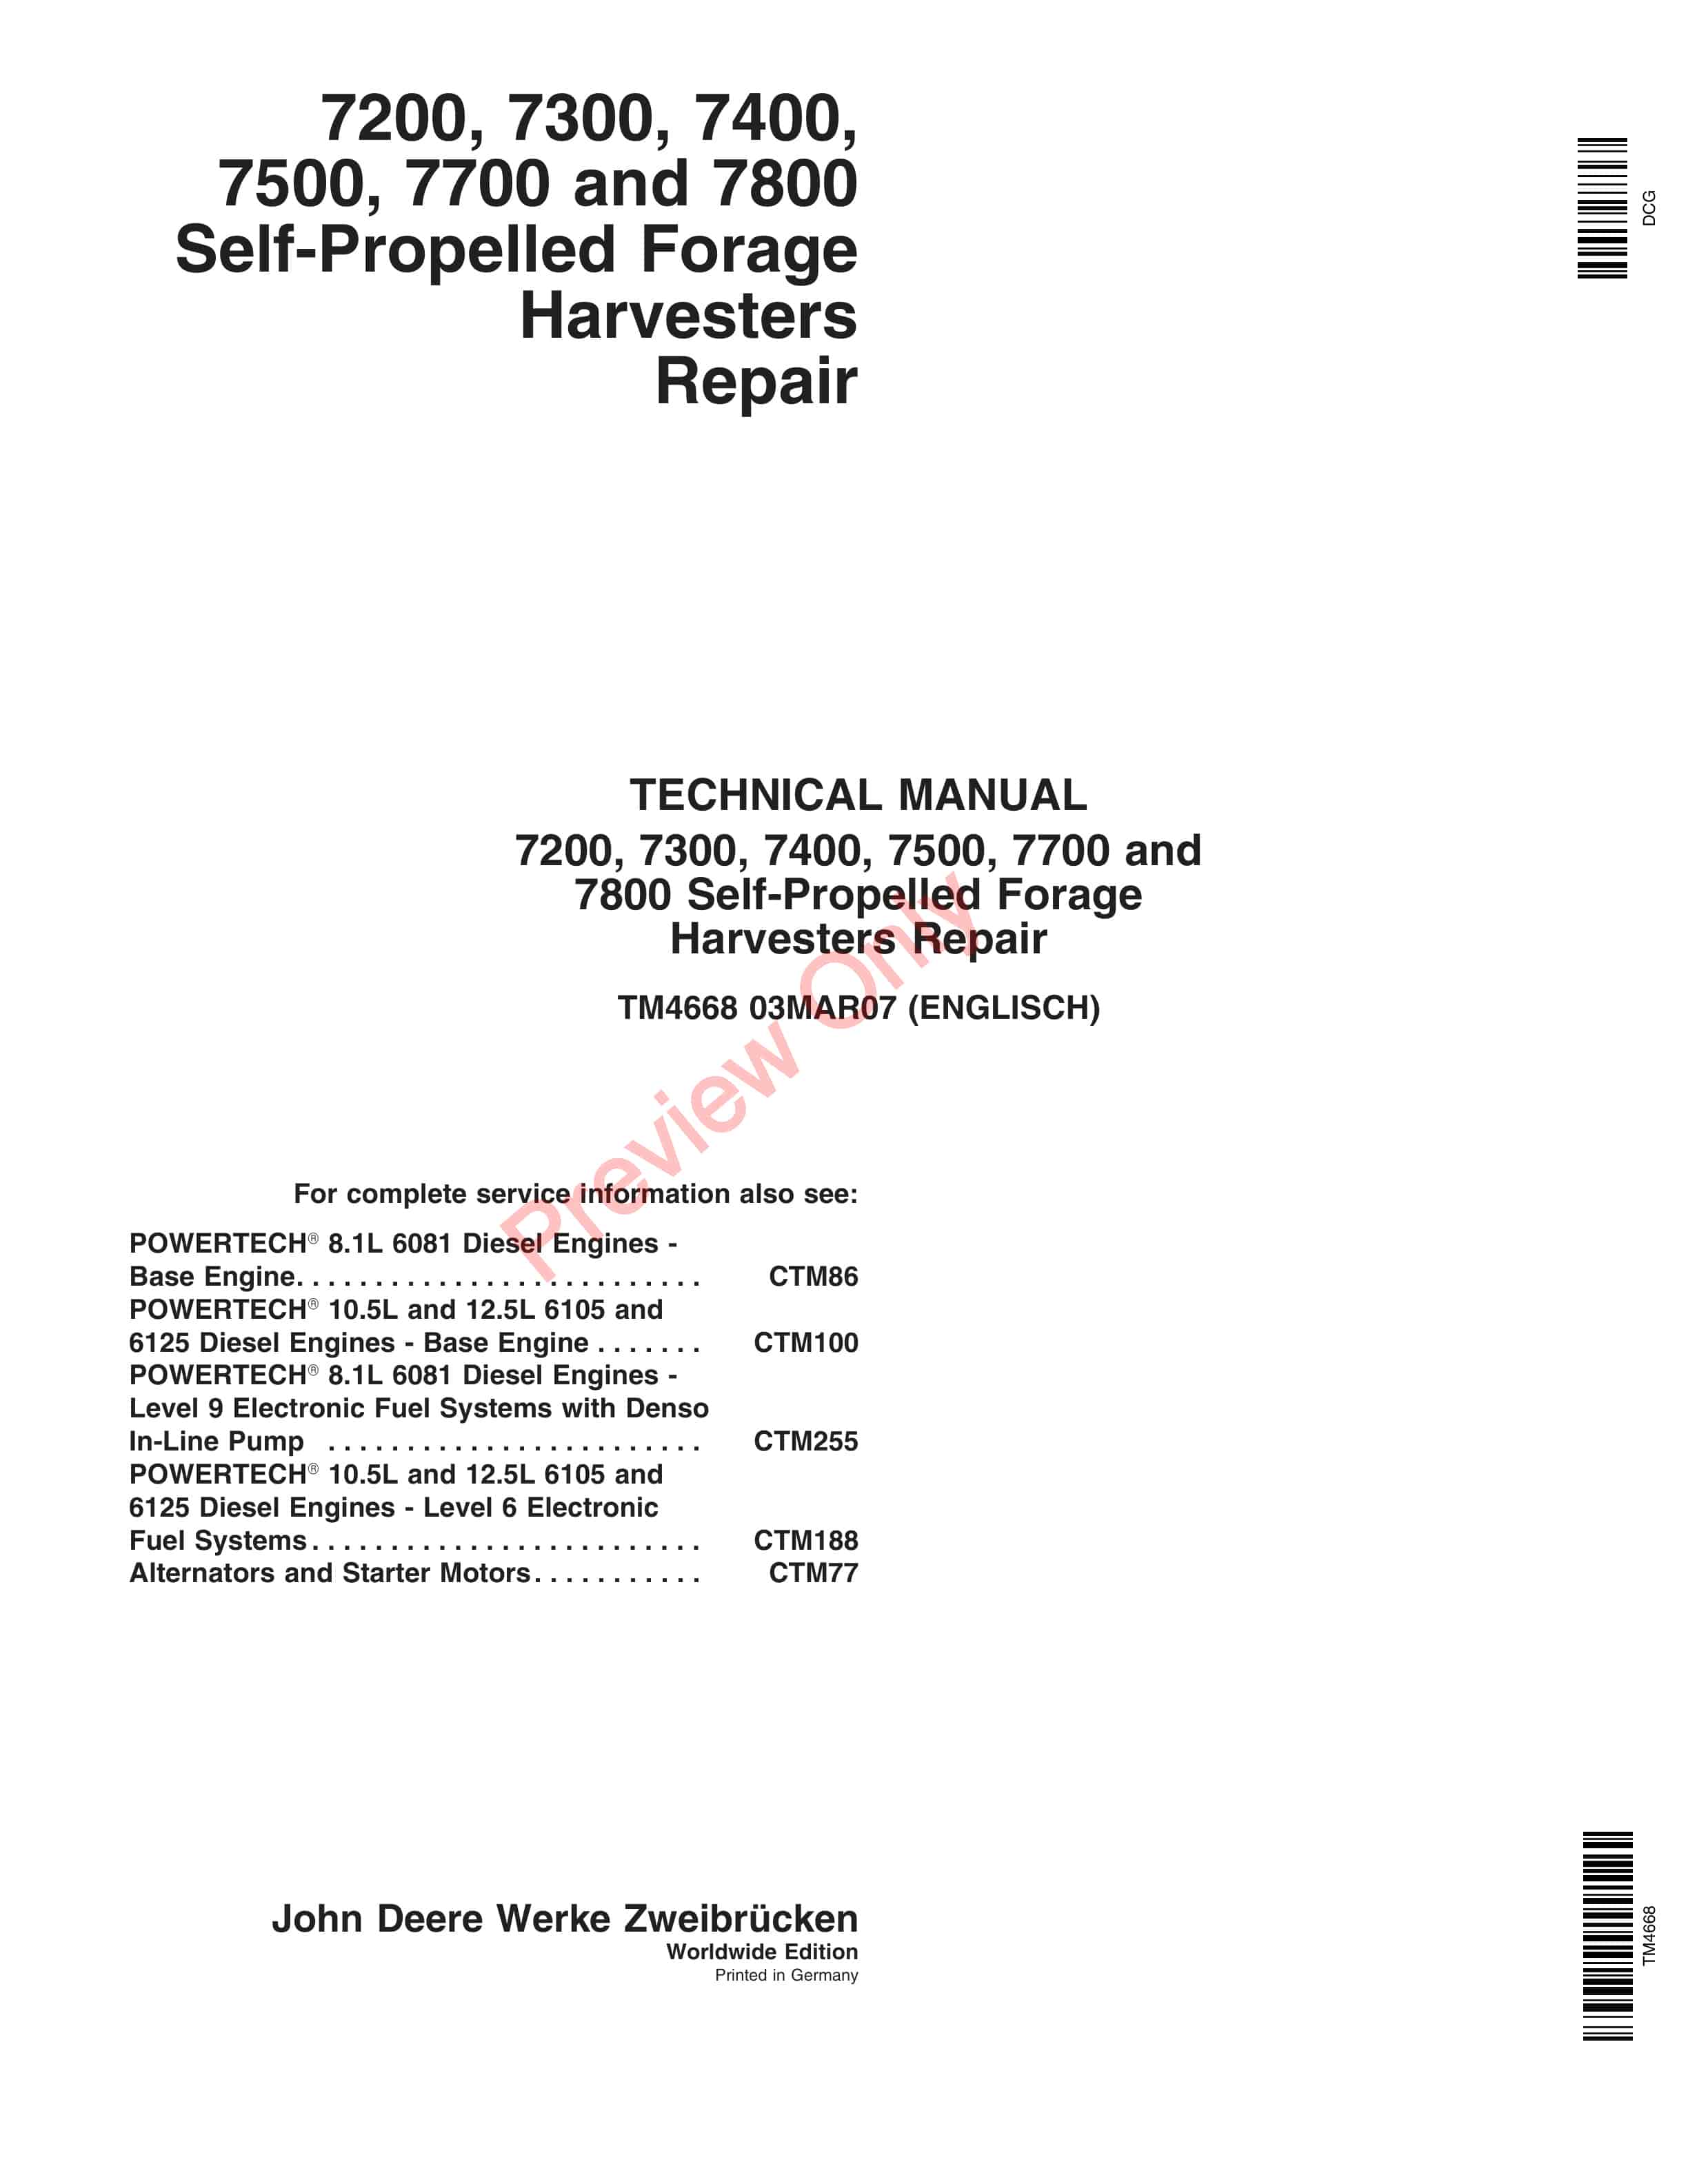 John Deere 7200 7300 7400 7500 7700 and 7800 Forage Harvester Technical Manual TM4668 03MAR07 1